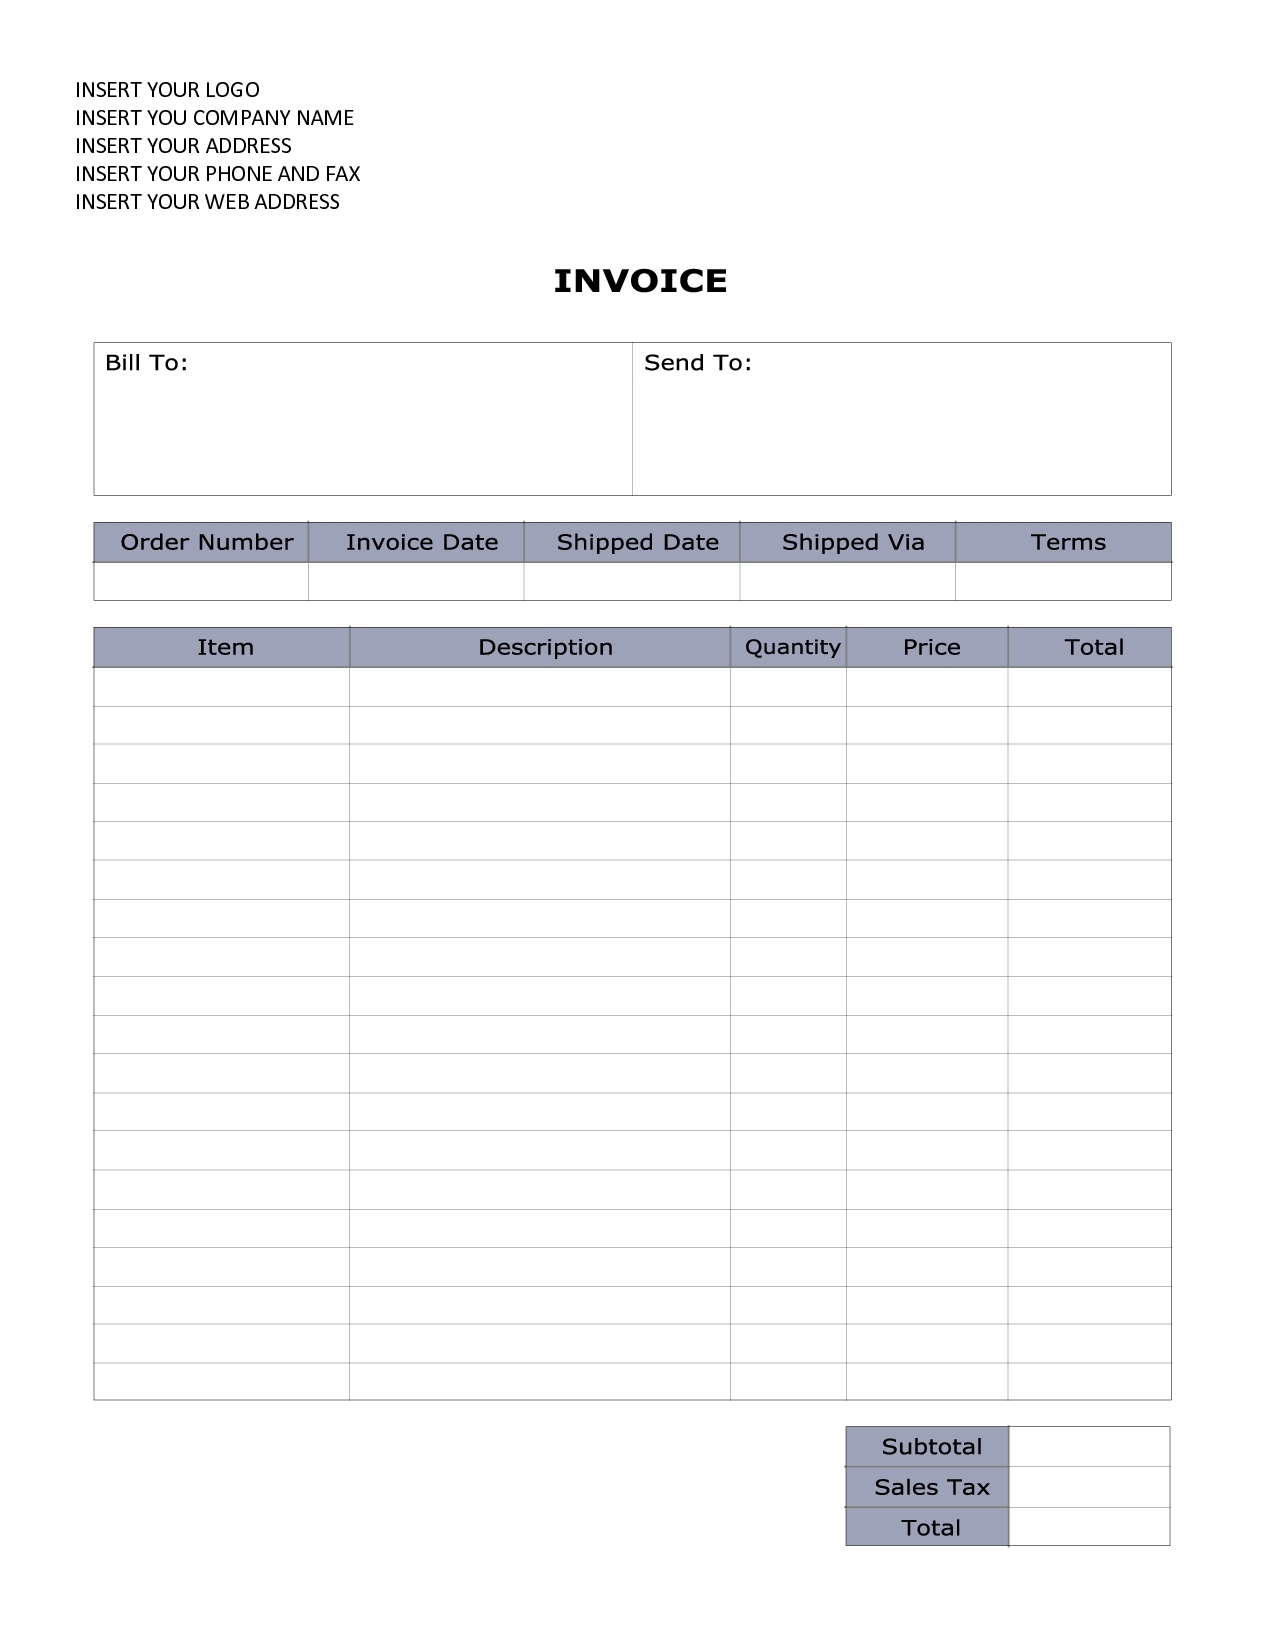 microsoft word invoice template 2010 invoice template free 2016 word 2010 invoice template